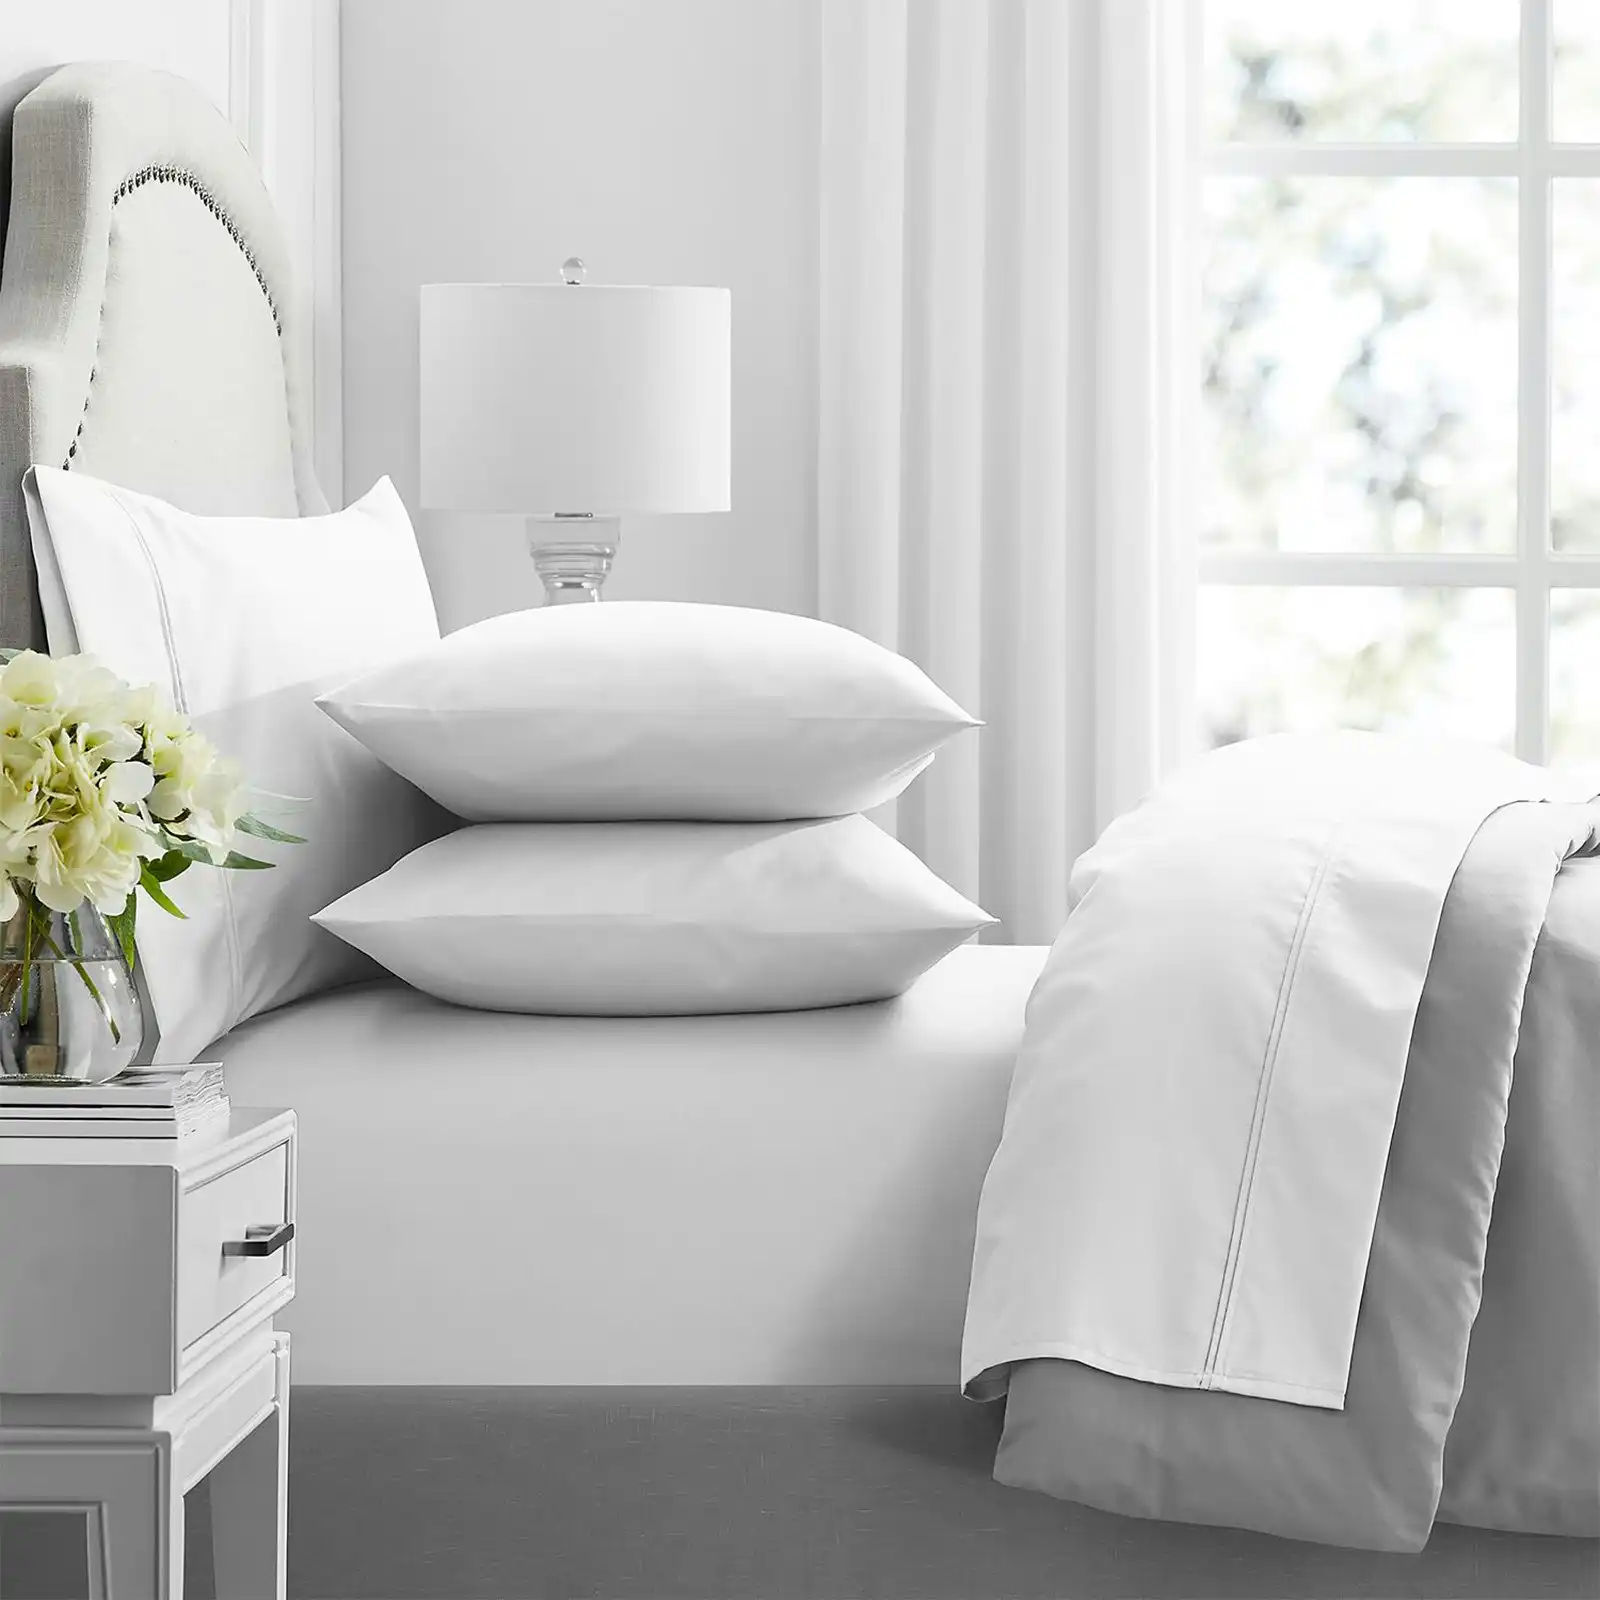 Renee Taylor Mega Queen Bed Sheet Premium 1000TC  Egyptian Cotton Bedding White